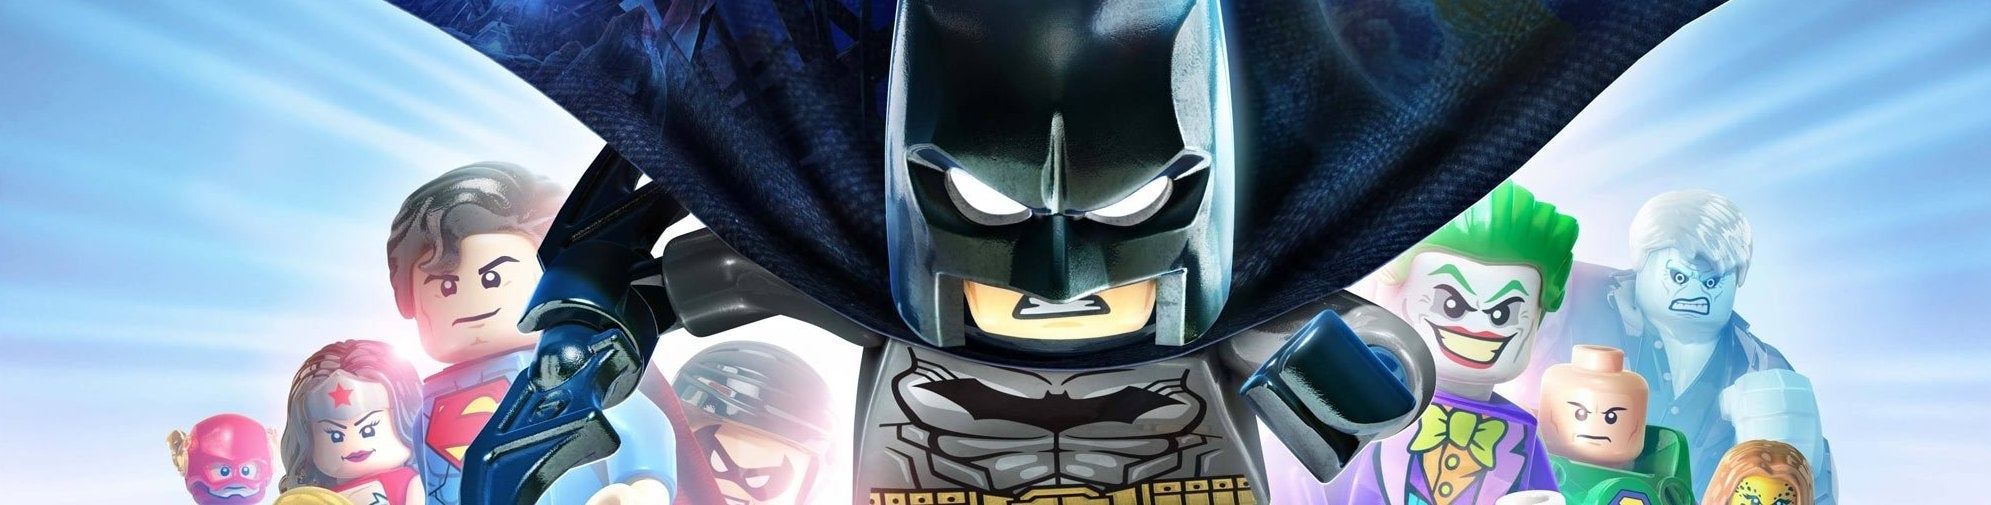 Immagine di LEGO Batman 3: Gotham e Oltre - review